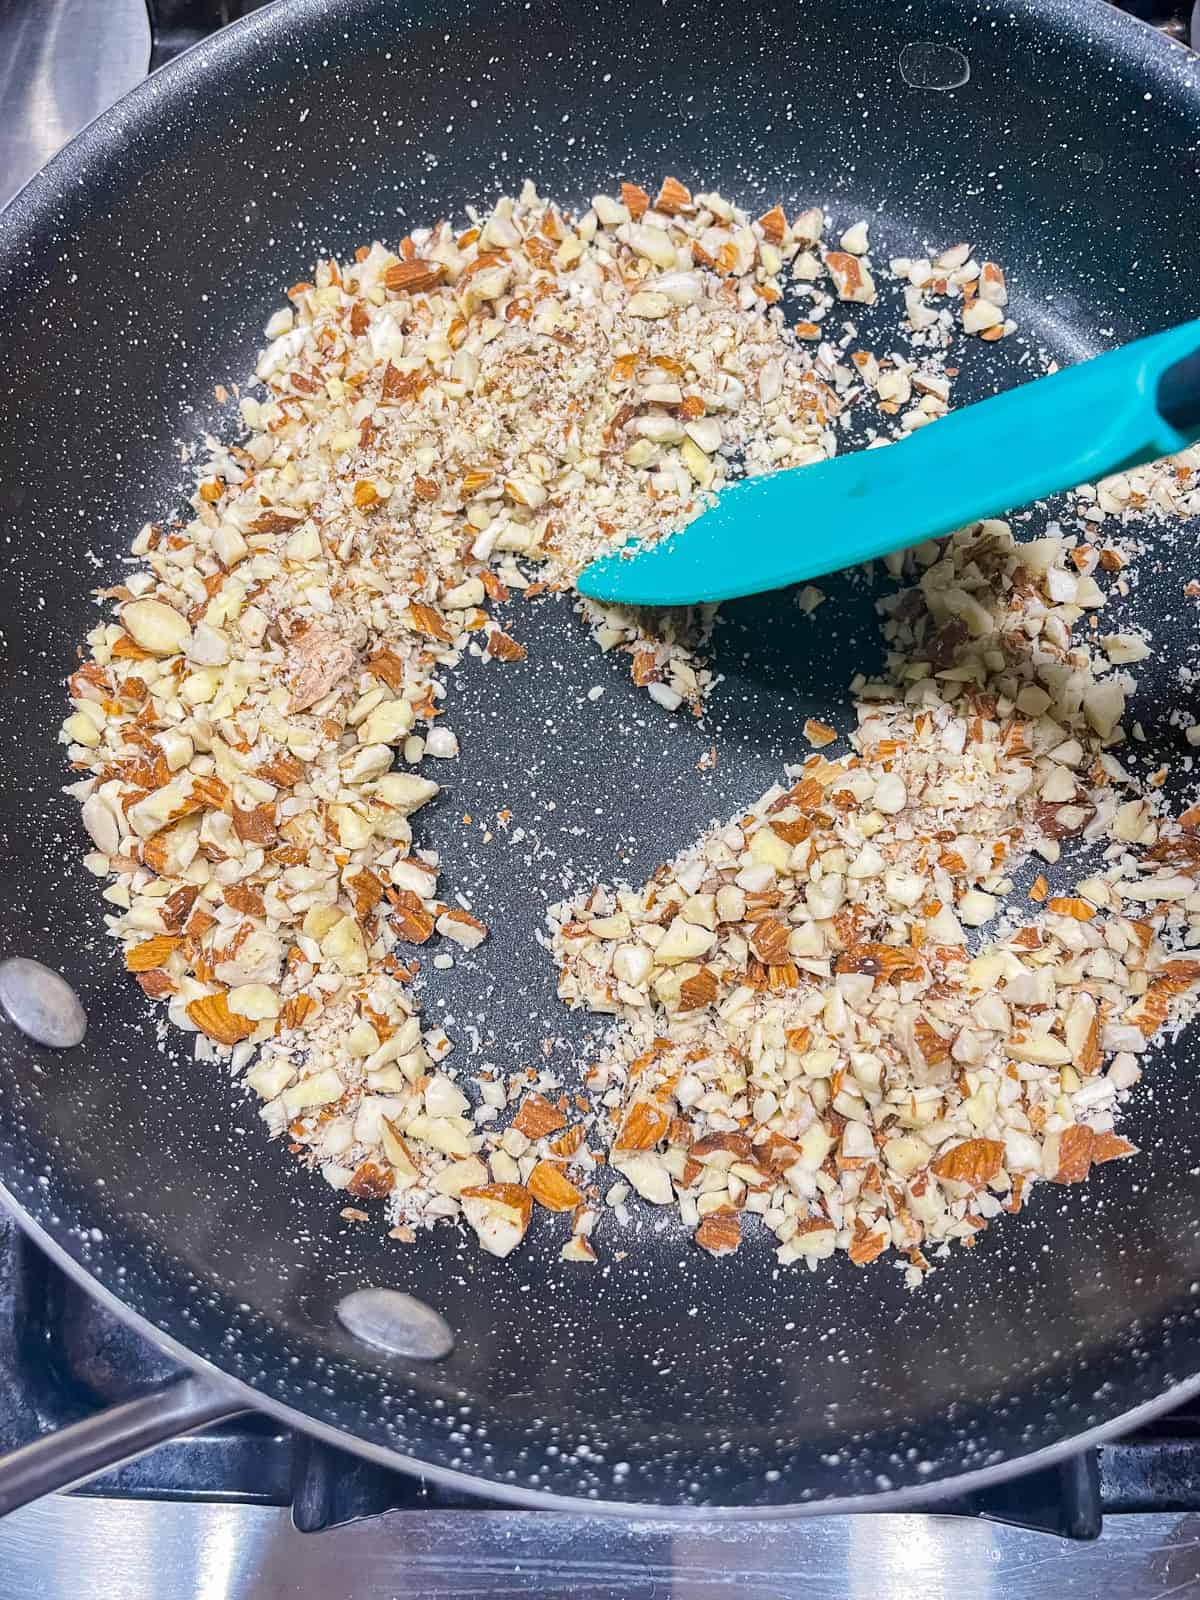 Process roasting almonds in pan 2